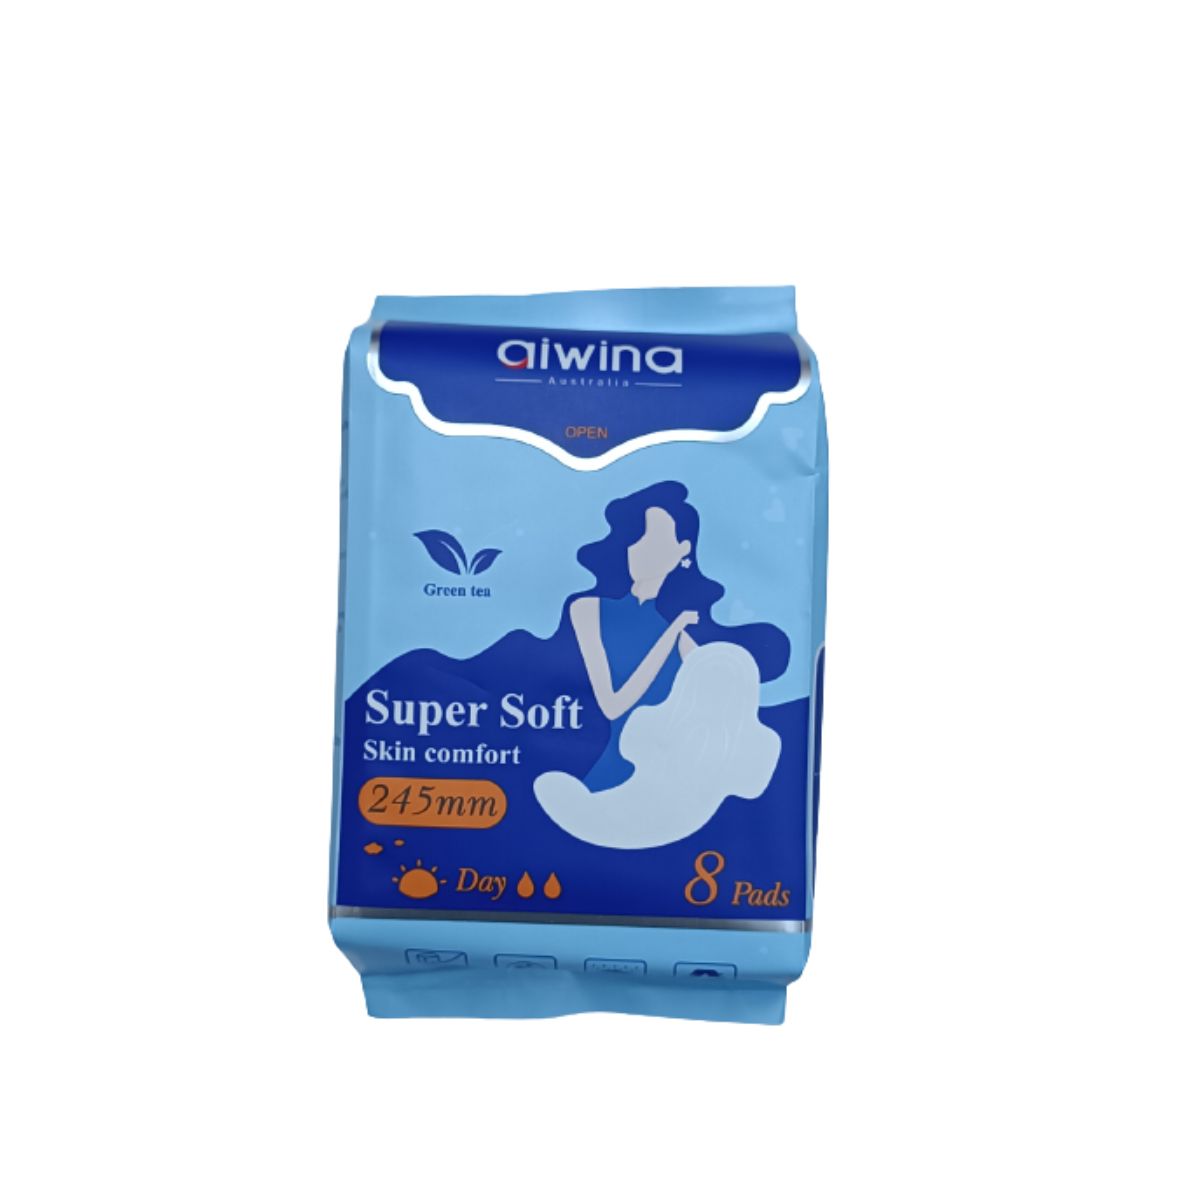 Aiwina Sanitary Napkin - Super Soft - Skin Comfort - Day - 245mm - 8pads